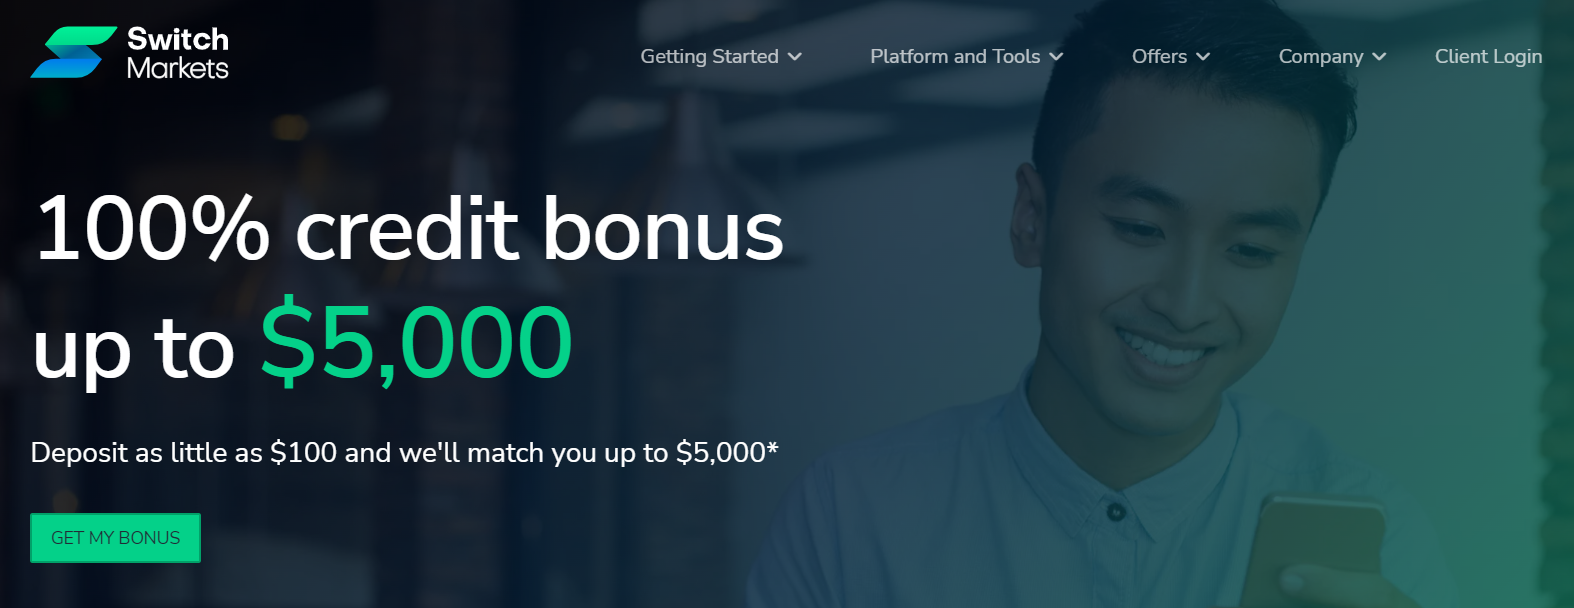 Switch Markets Bonuses - $5.000